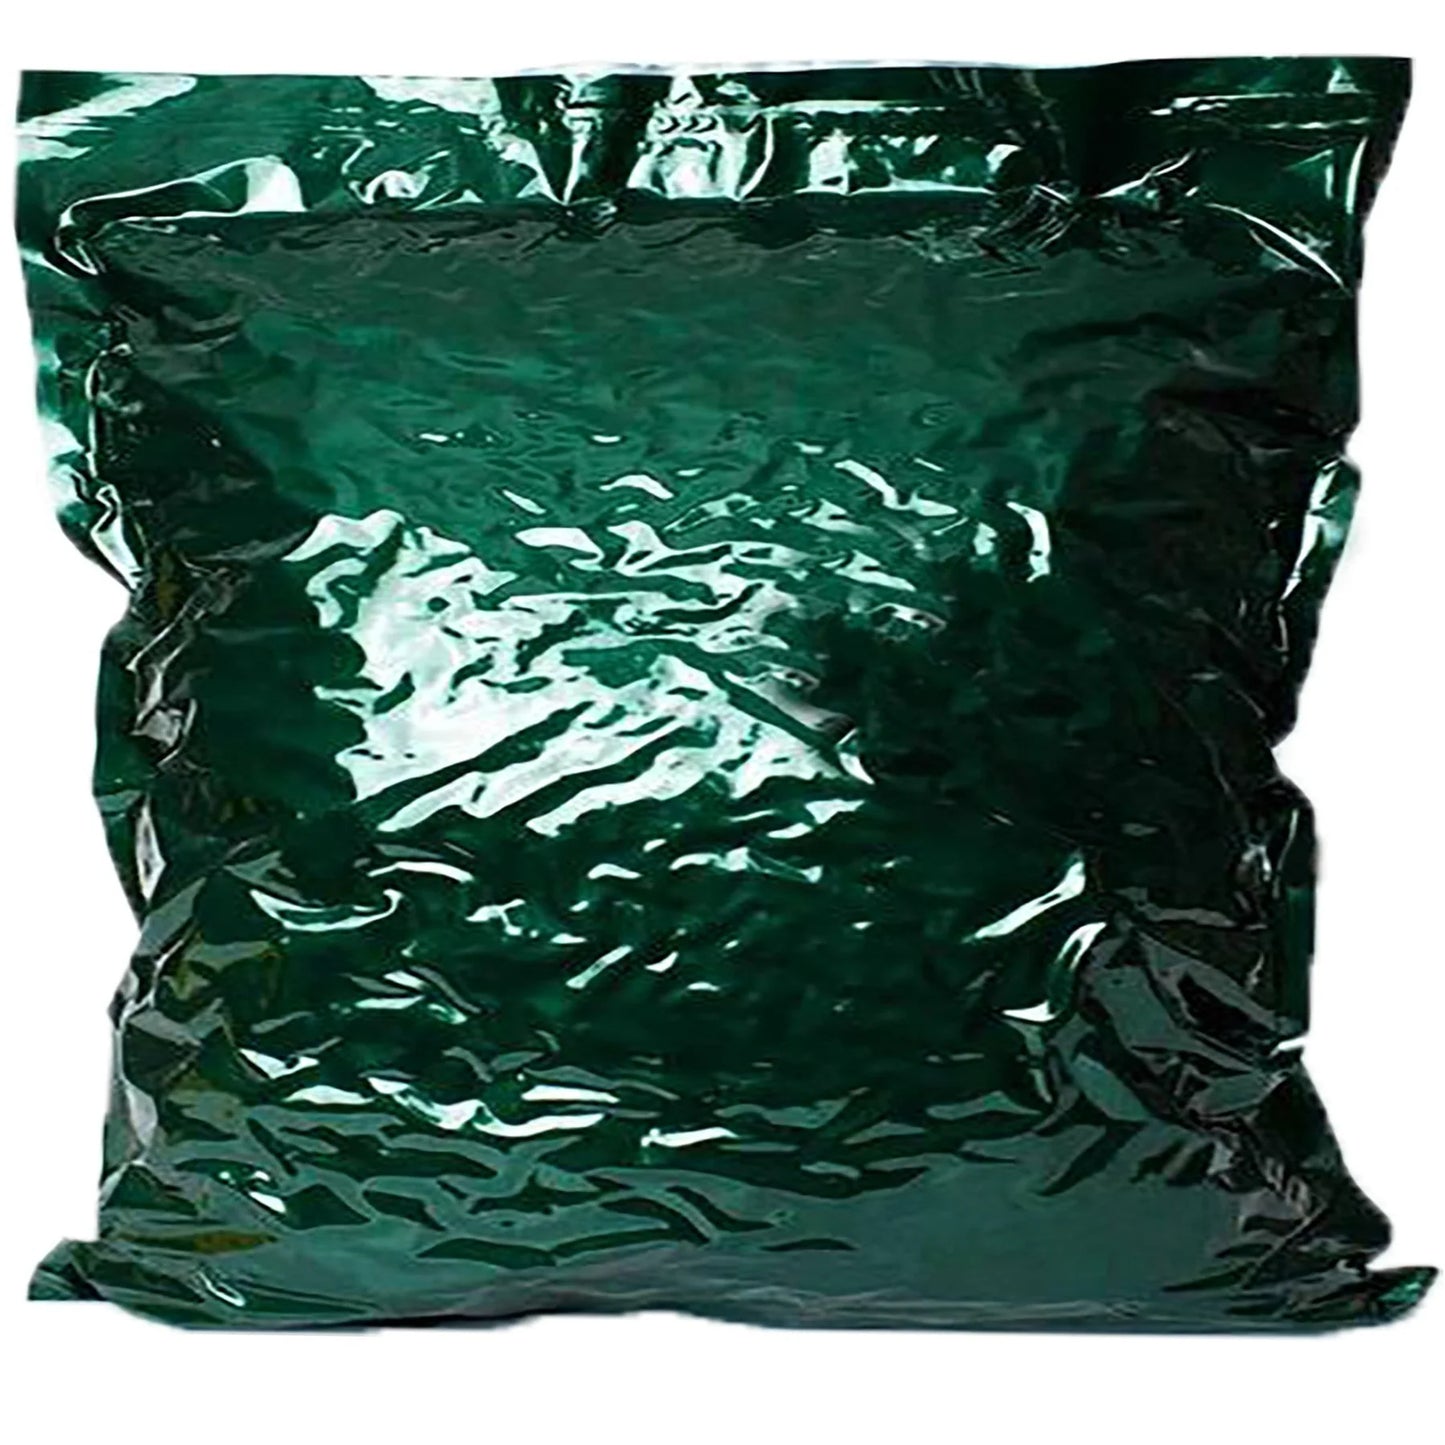 Green Mylar Foil Bag - 45.09cm X 47.63cm (17.75 Inches X 18.75 Inches)